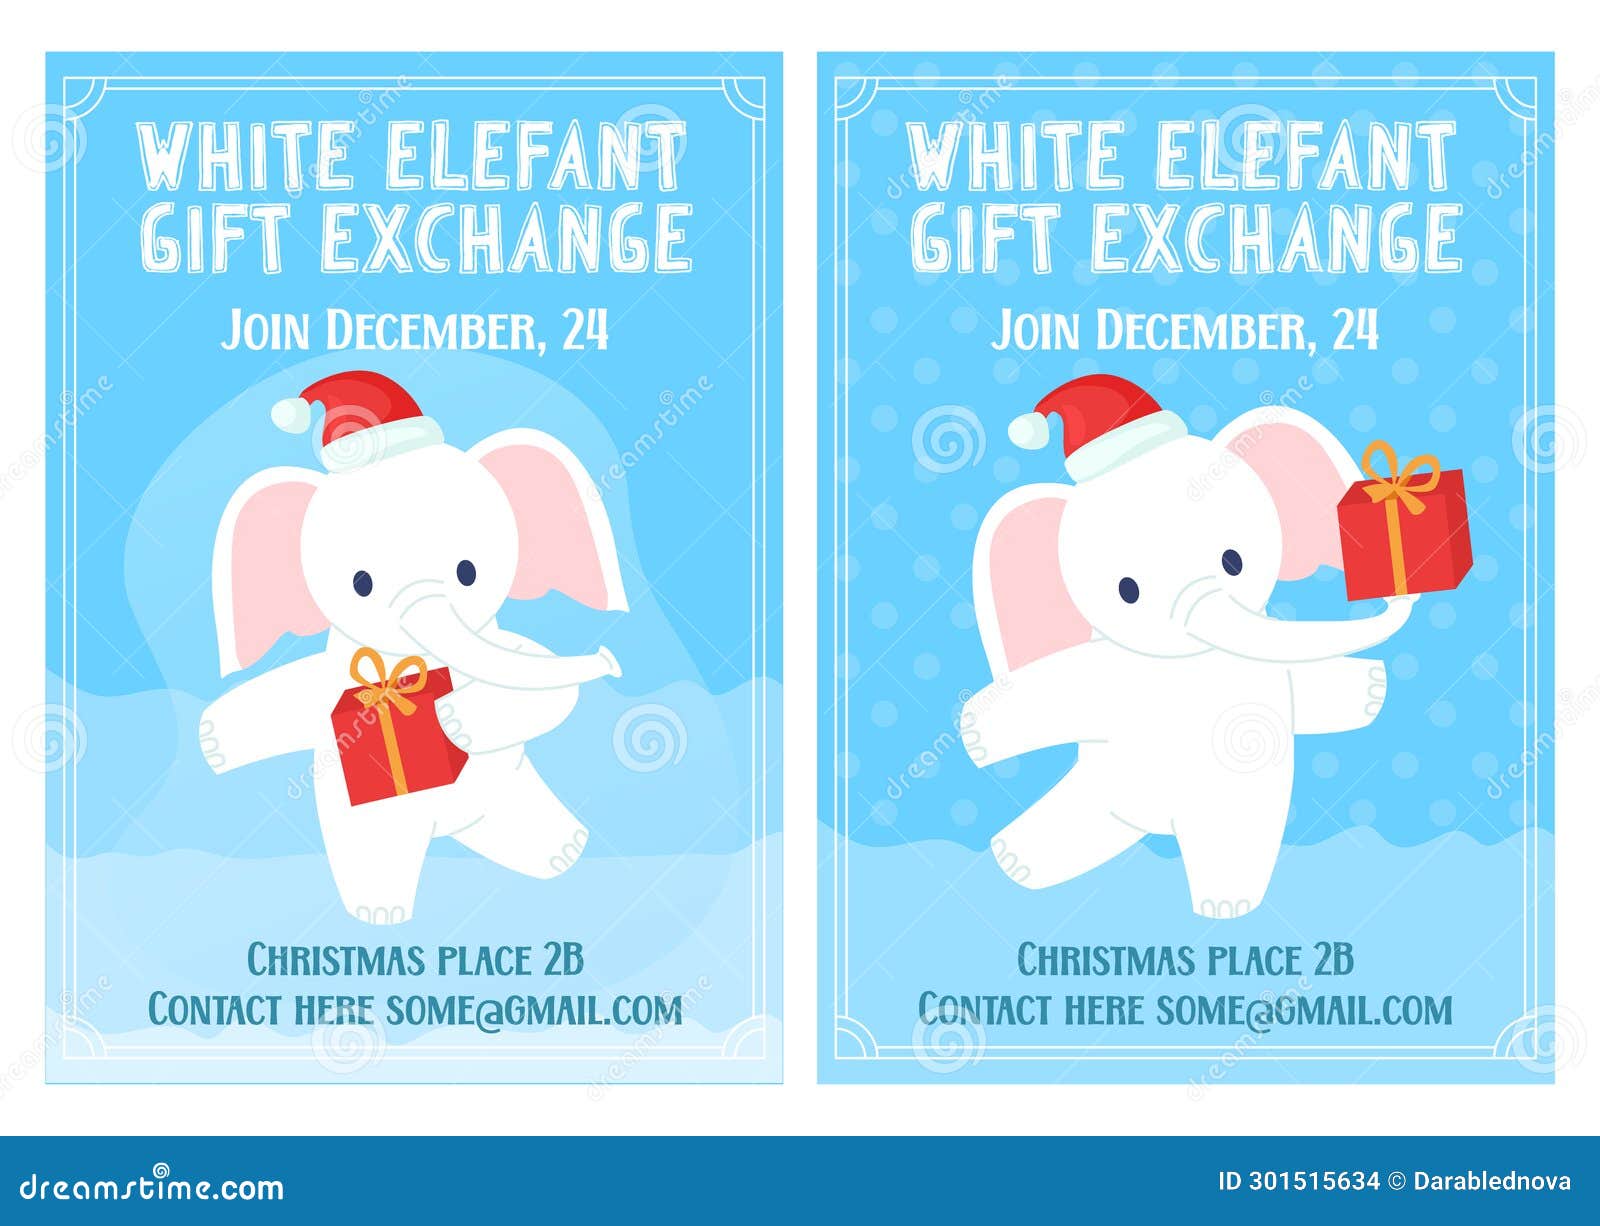 Free White Elephant Gift Exchange Holiday Party Communication Templates